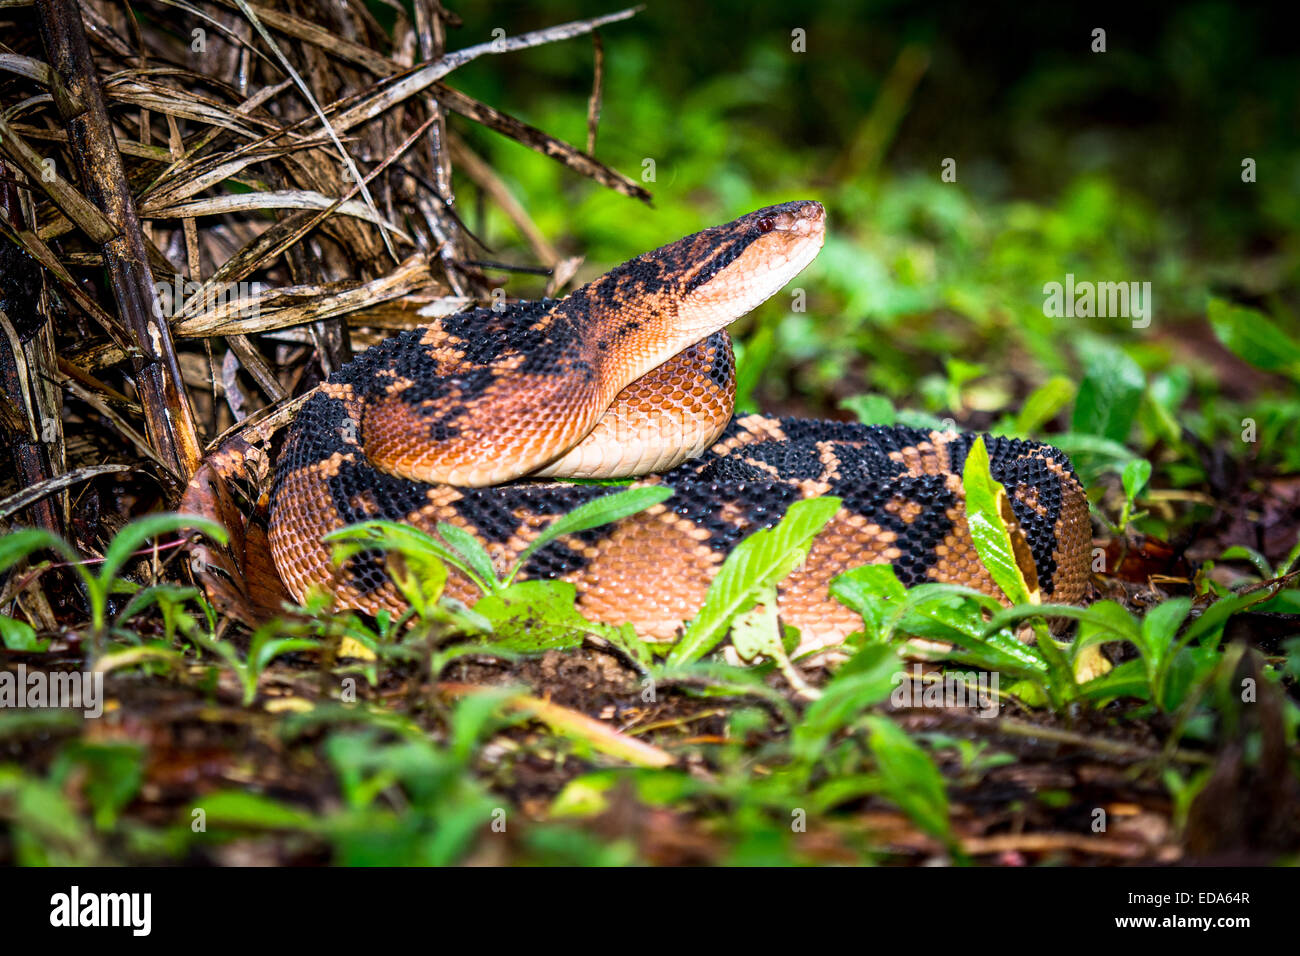 Shushupe - Amazon Bushmaster snake - lachesis muta Stock Photo